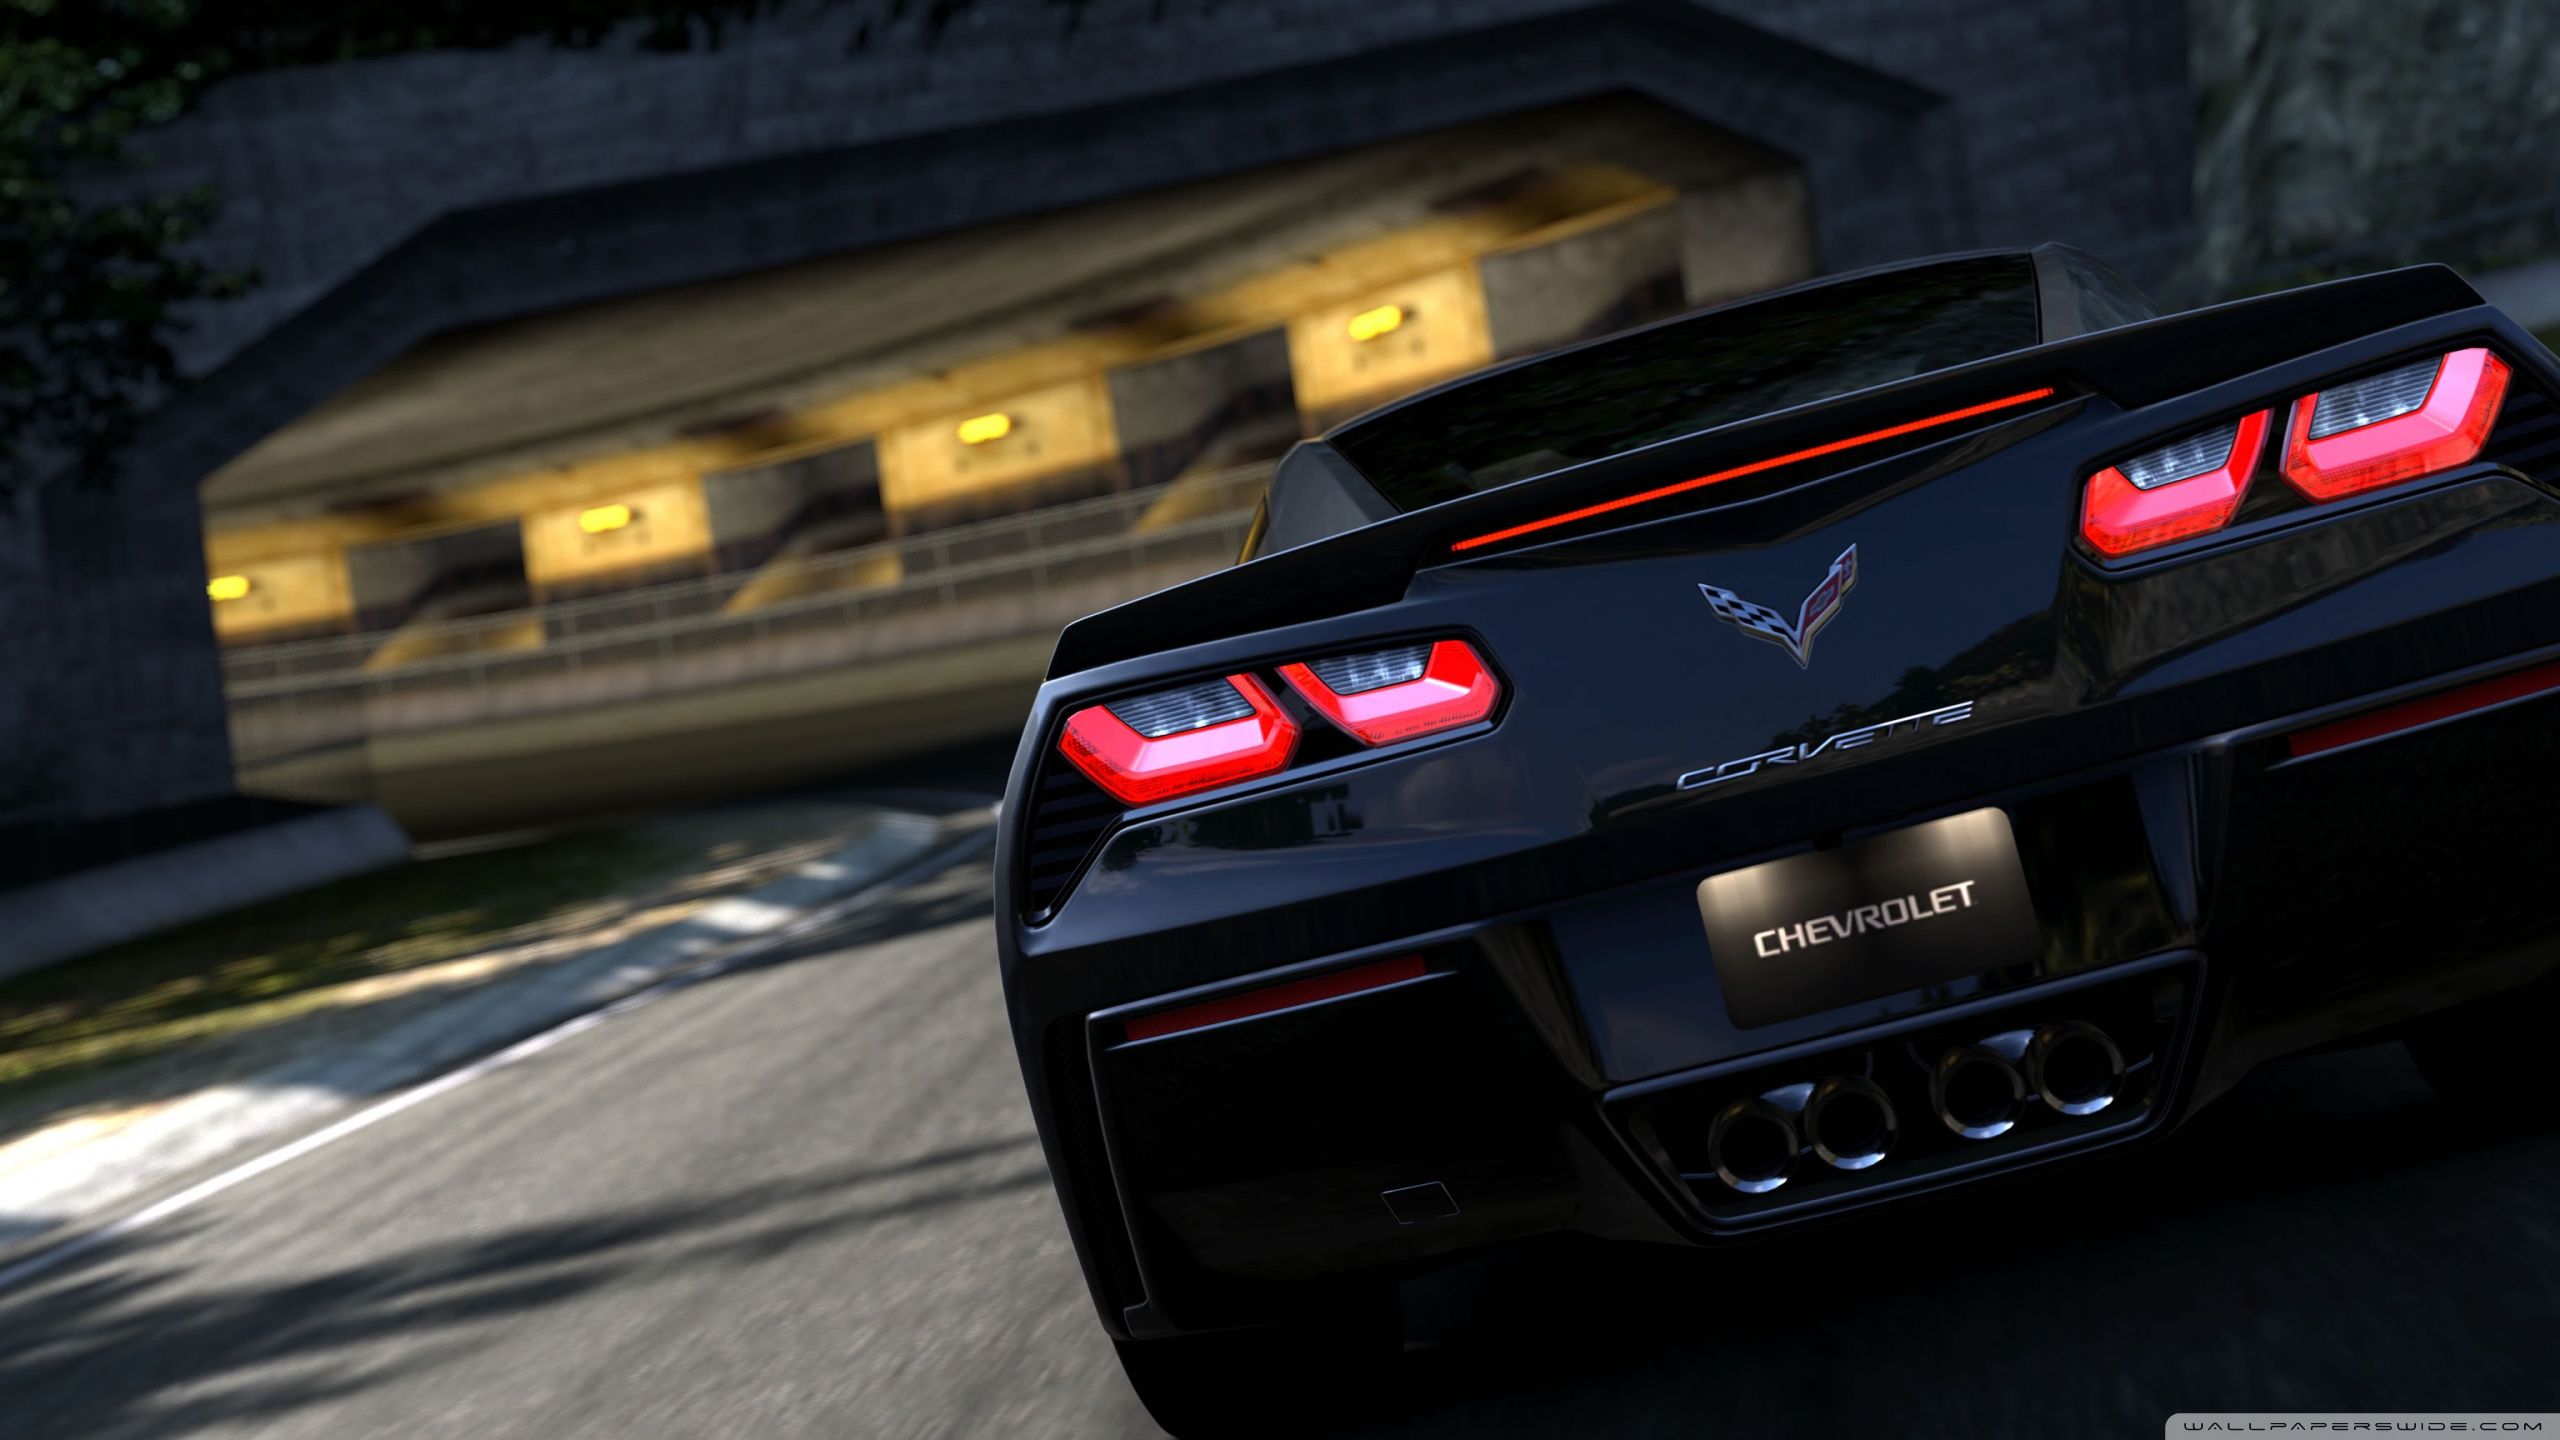 Corvette Desktop Background